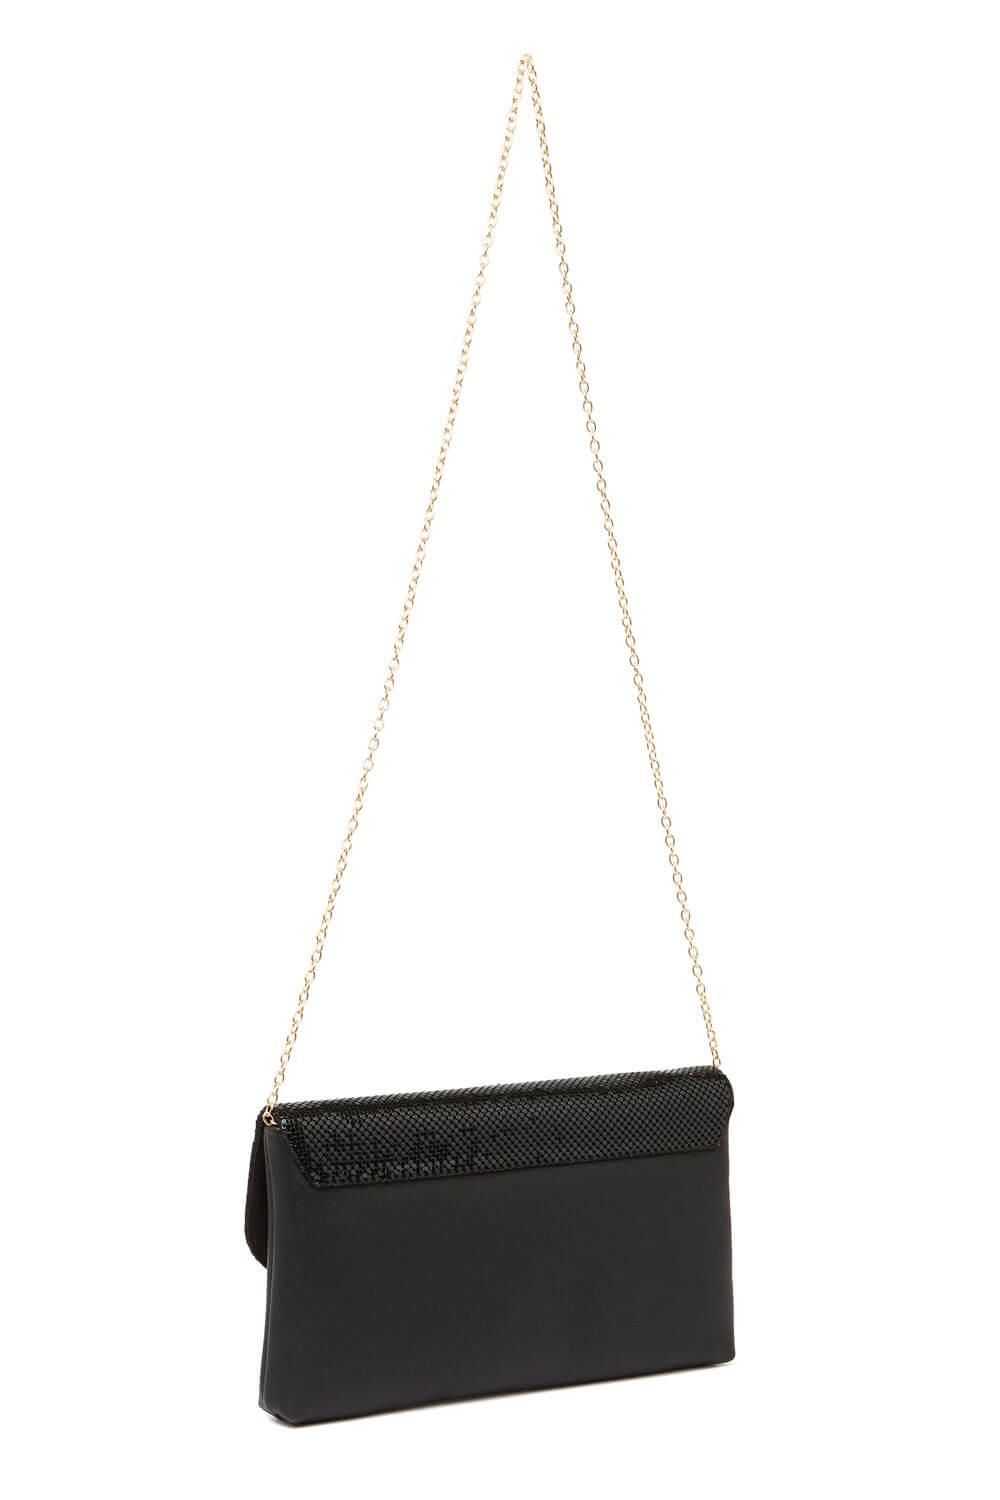 Black Twist Lock Chainmail PU Clutch Bag, Image 4 of 5